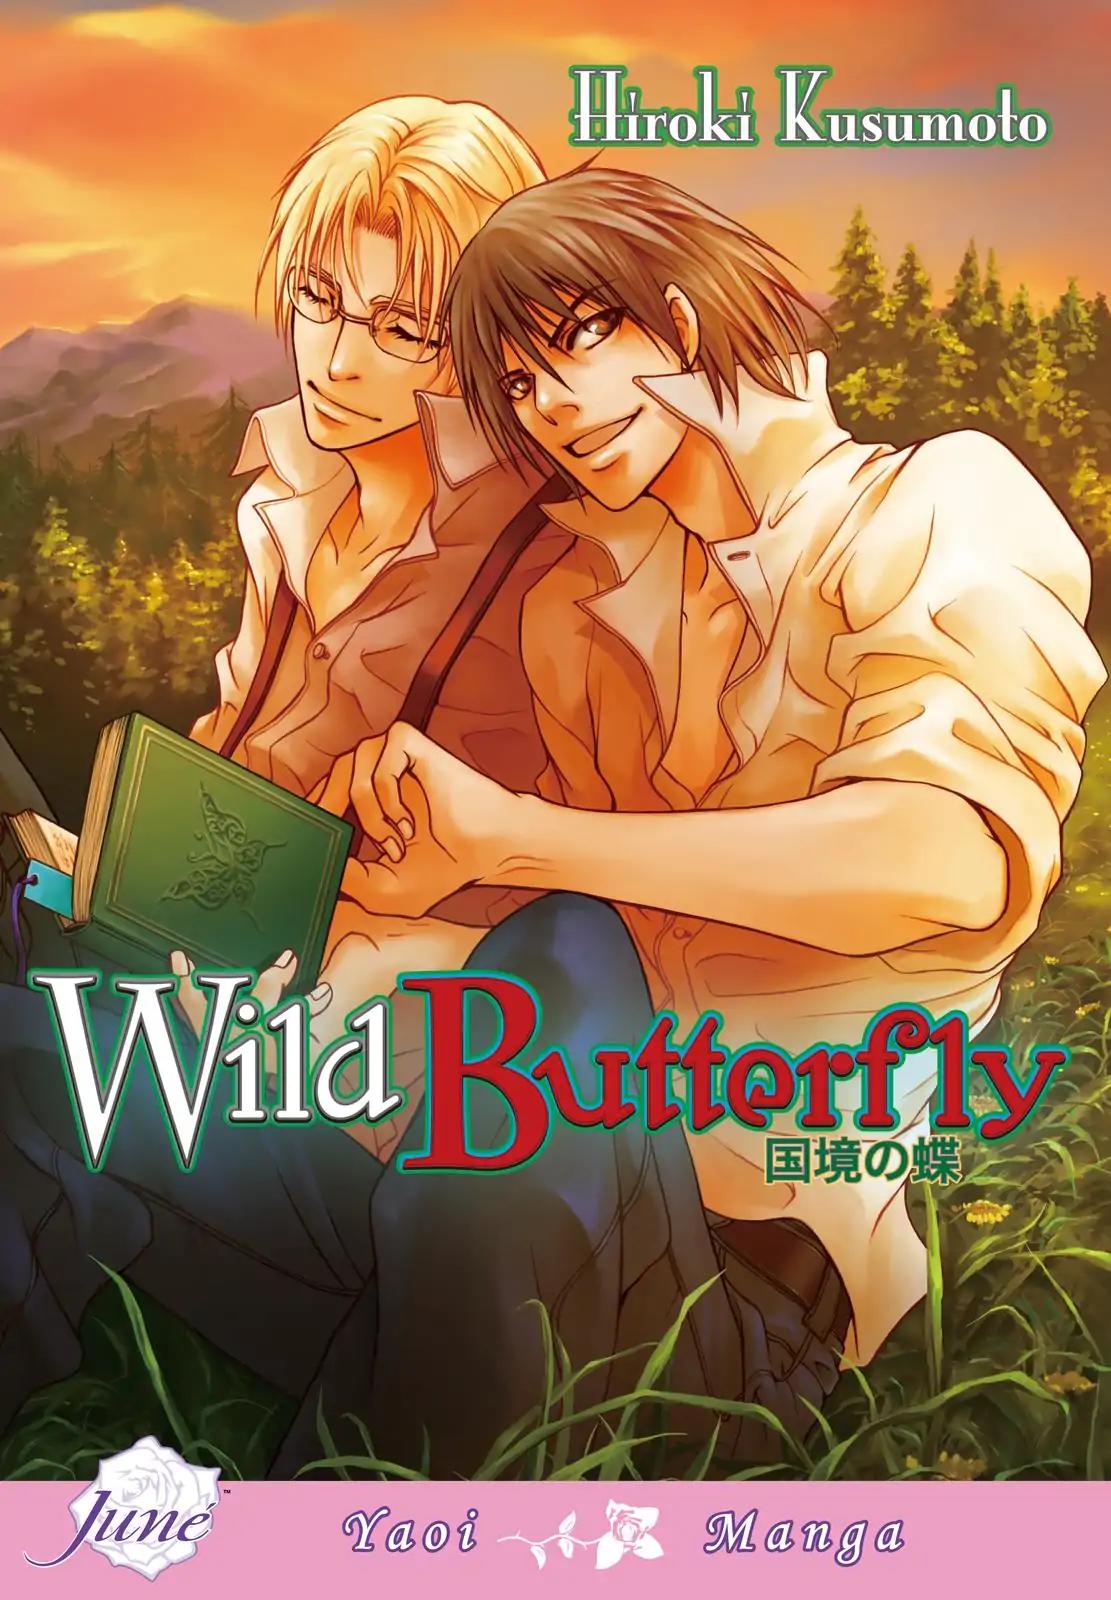 Wild Butterfly (Hiroki Kusumoto) Vol.1 Wild Buttertly